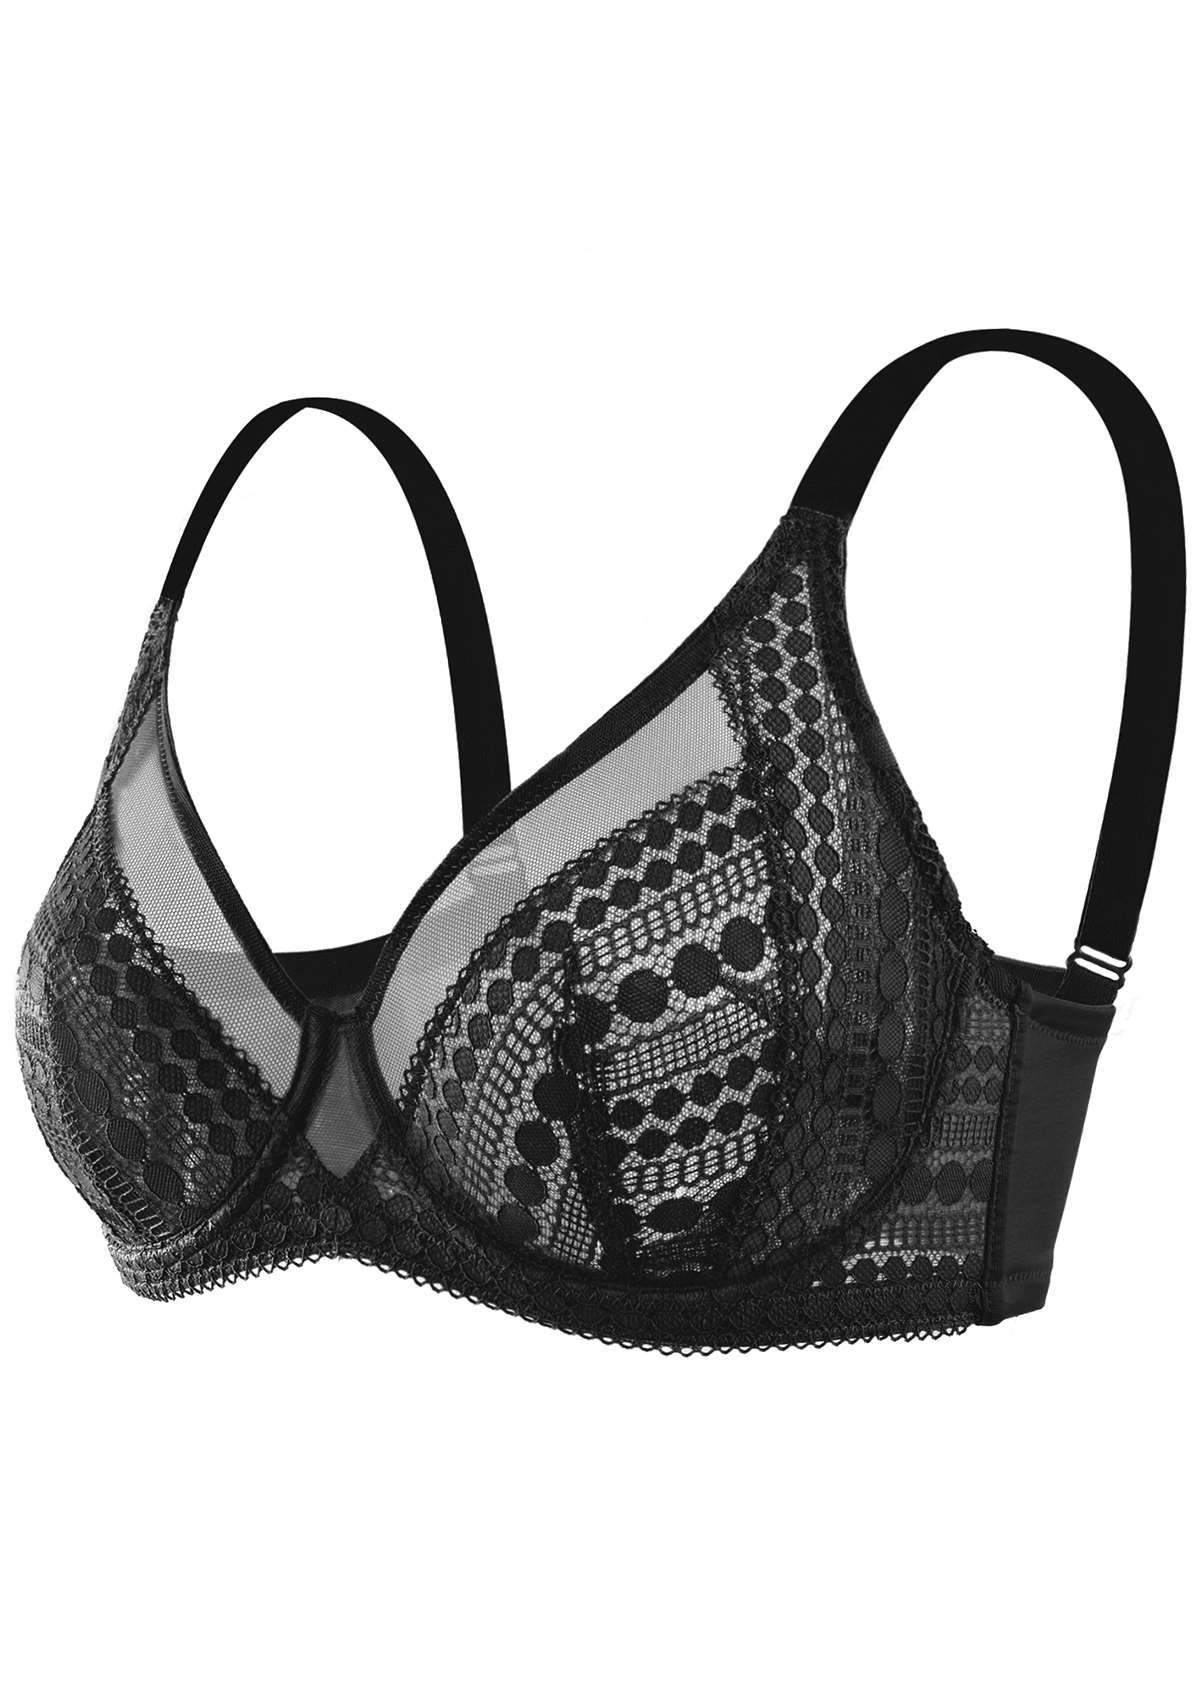 HSIA Heroine Matching Bra And Panties: Unlined Lace Unpadded Bra - Black / 38 / DDD/F